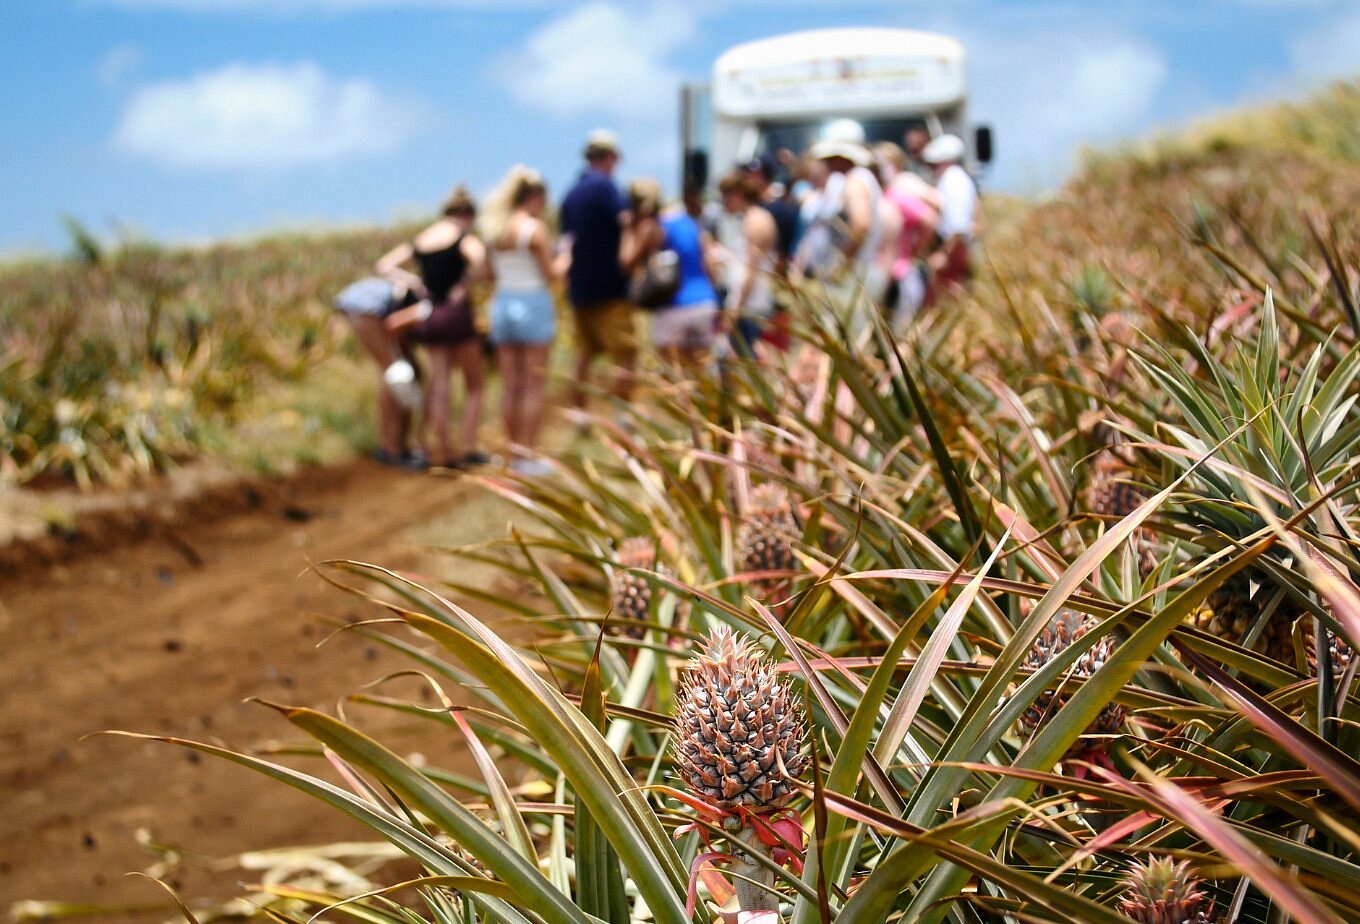 maui pineapple tour vs dole plantation